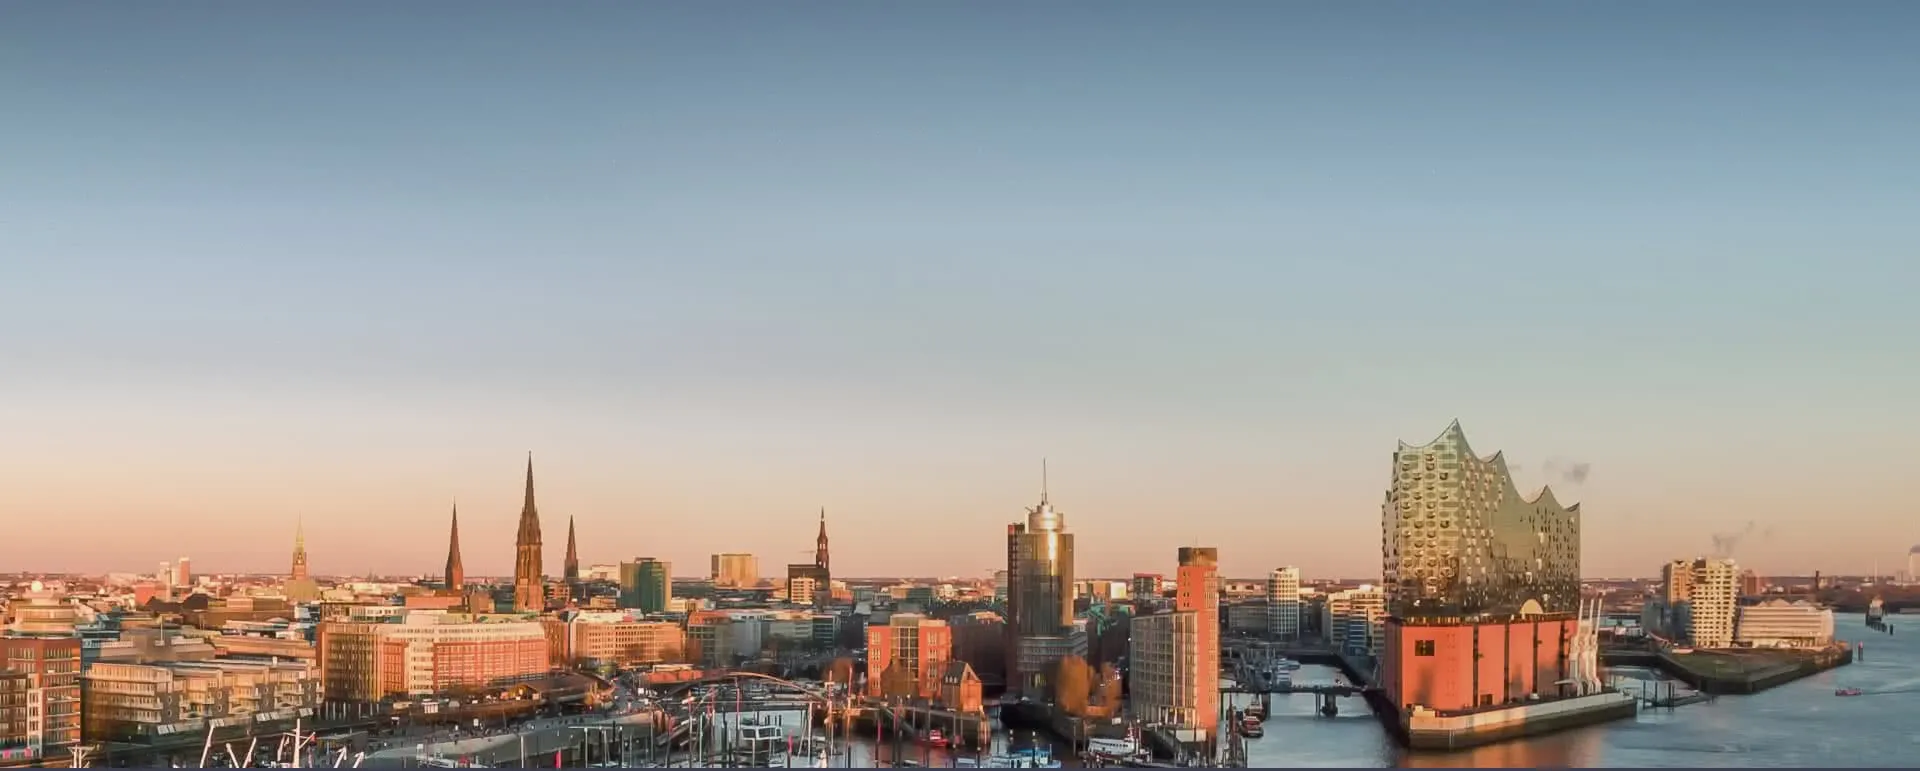 Hamburg - the destination for company trips